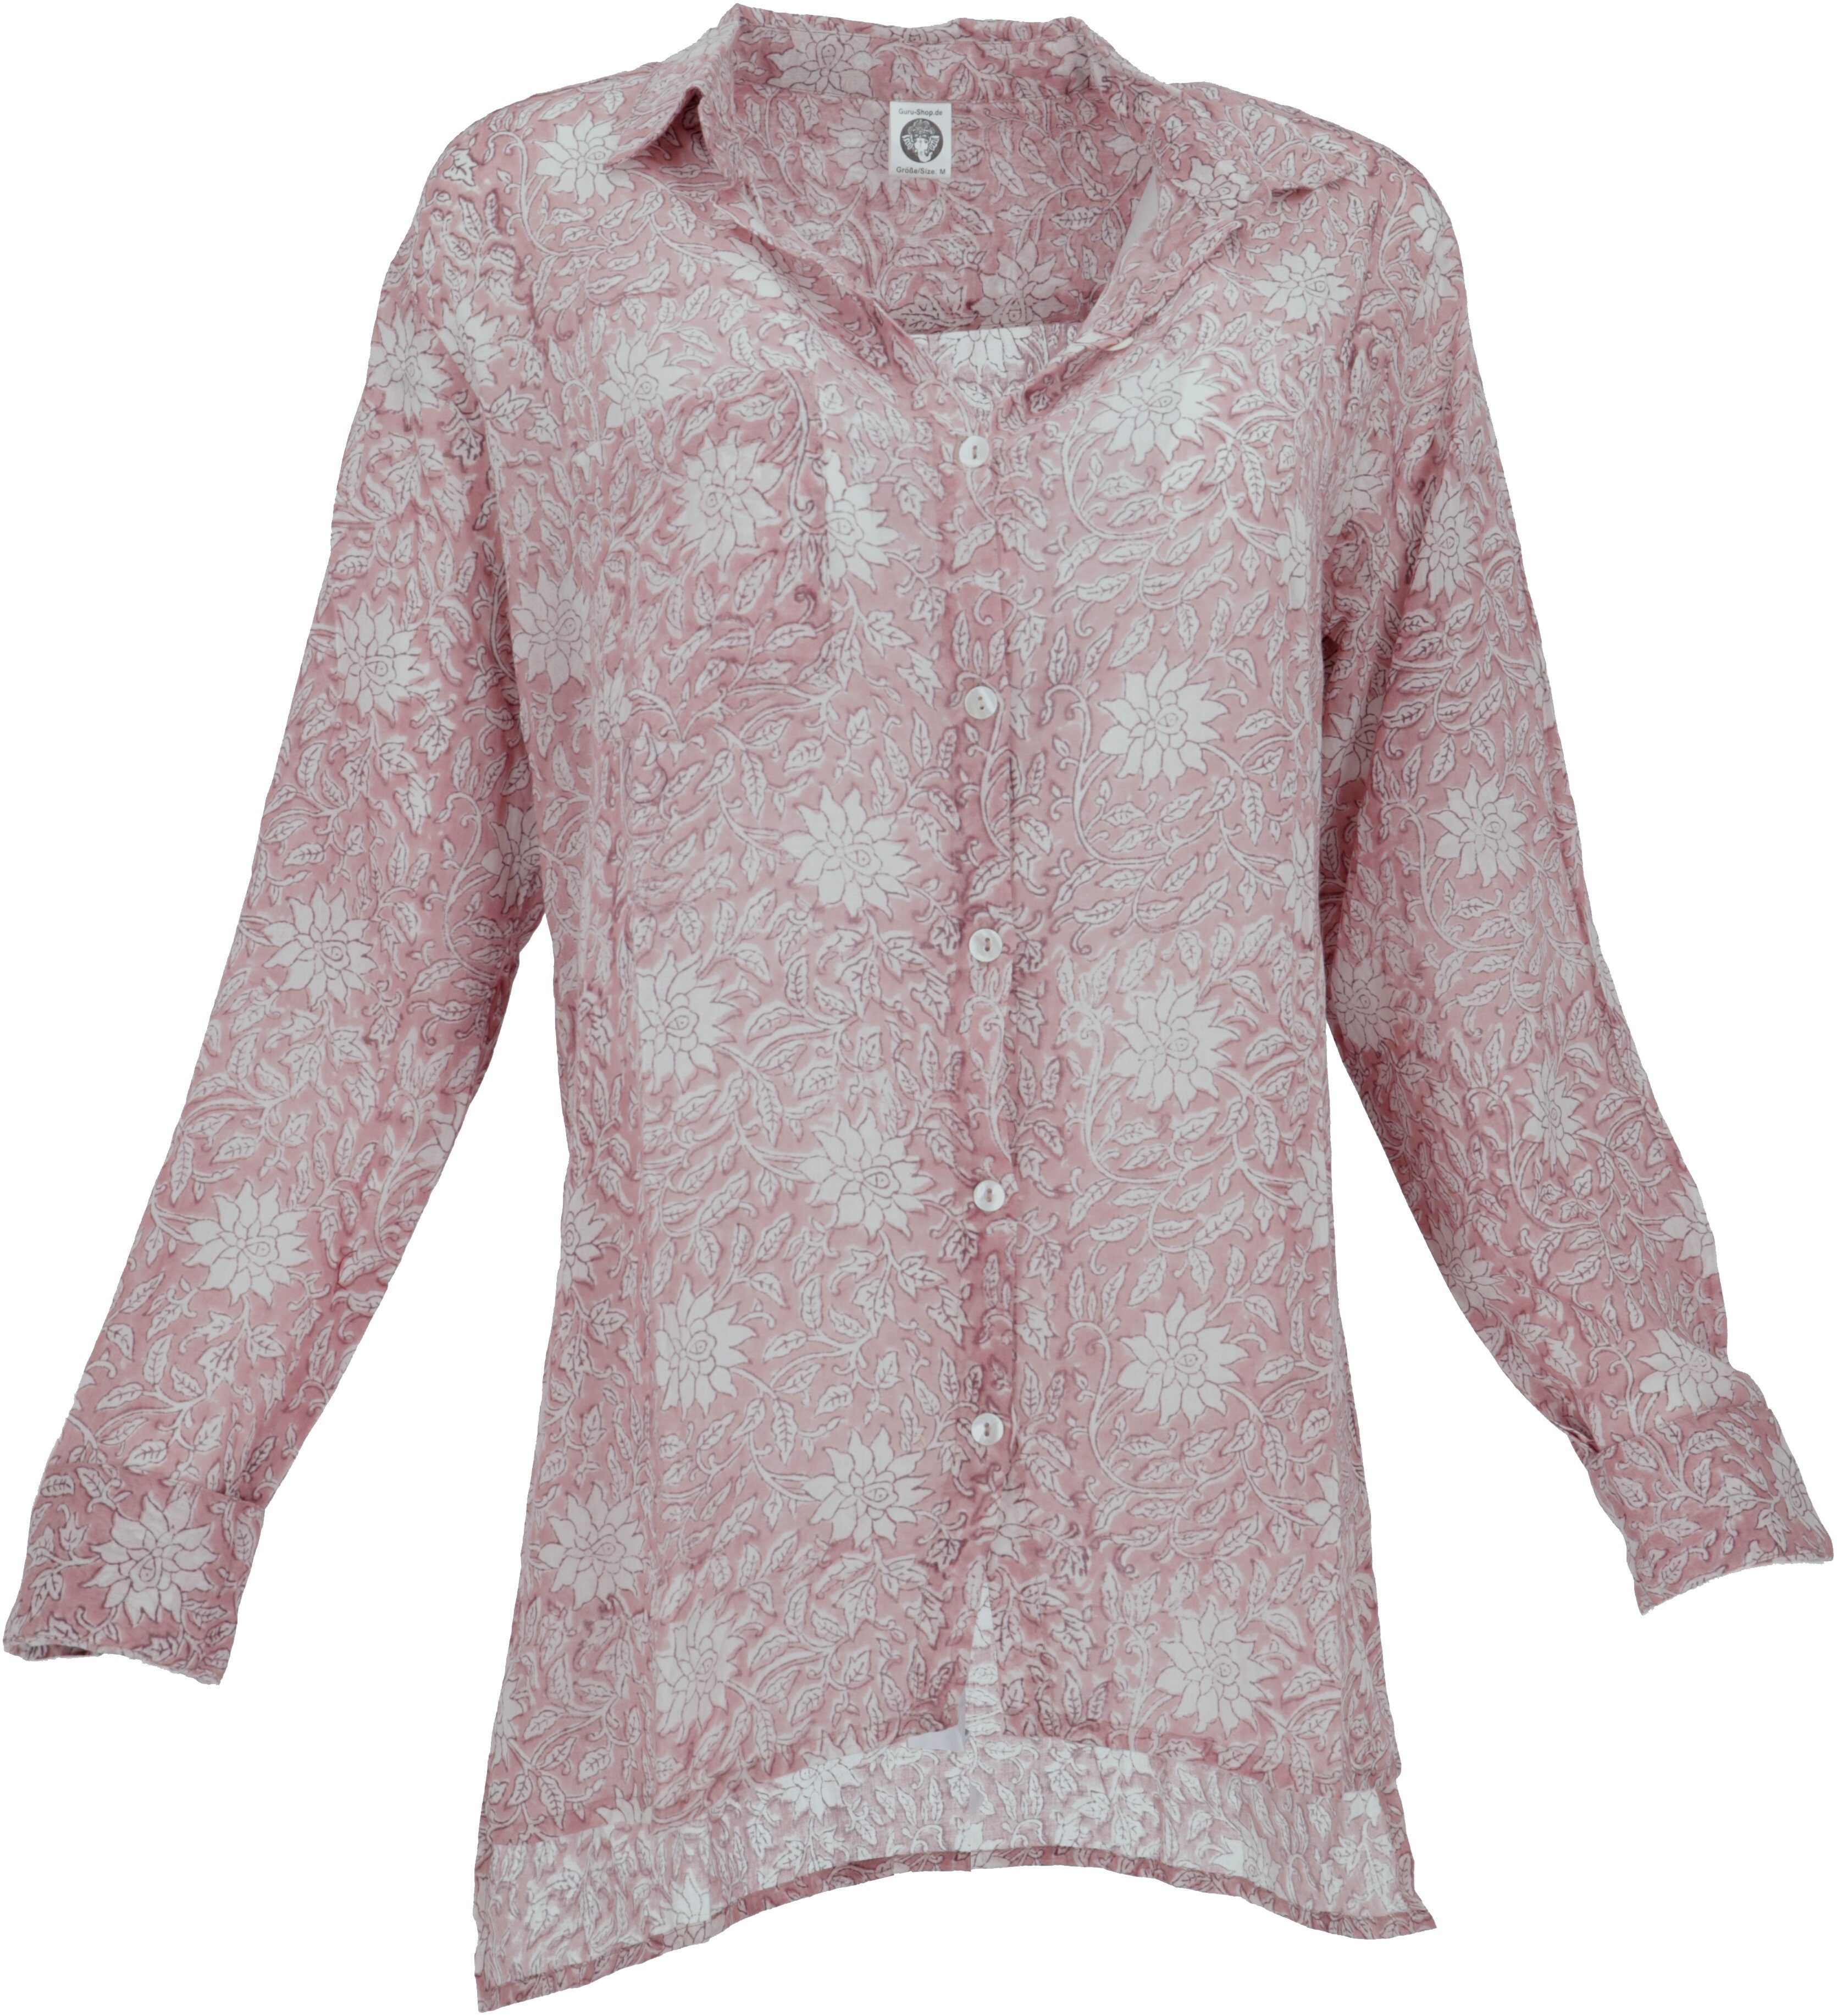 Guru-Shop Longbluse Handbedrucktes Boho Langarmhemd, luftiges.. alternative Bekleidung rosa